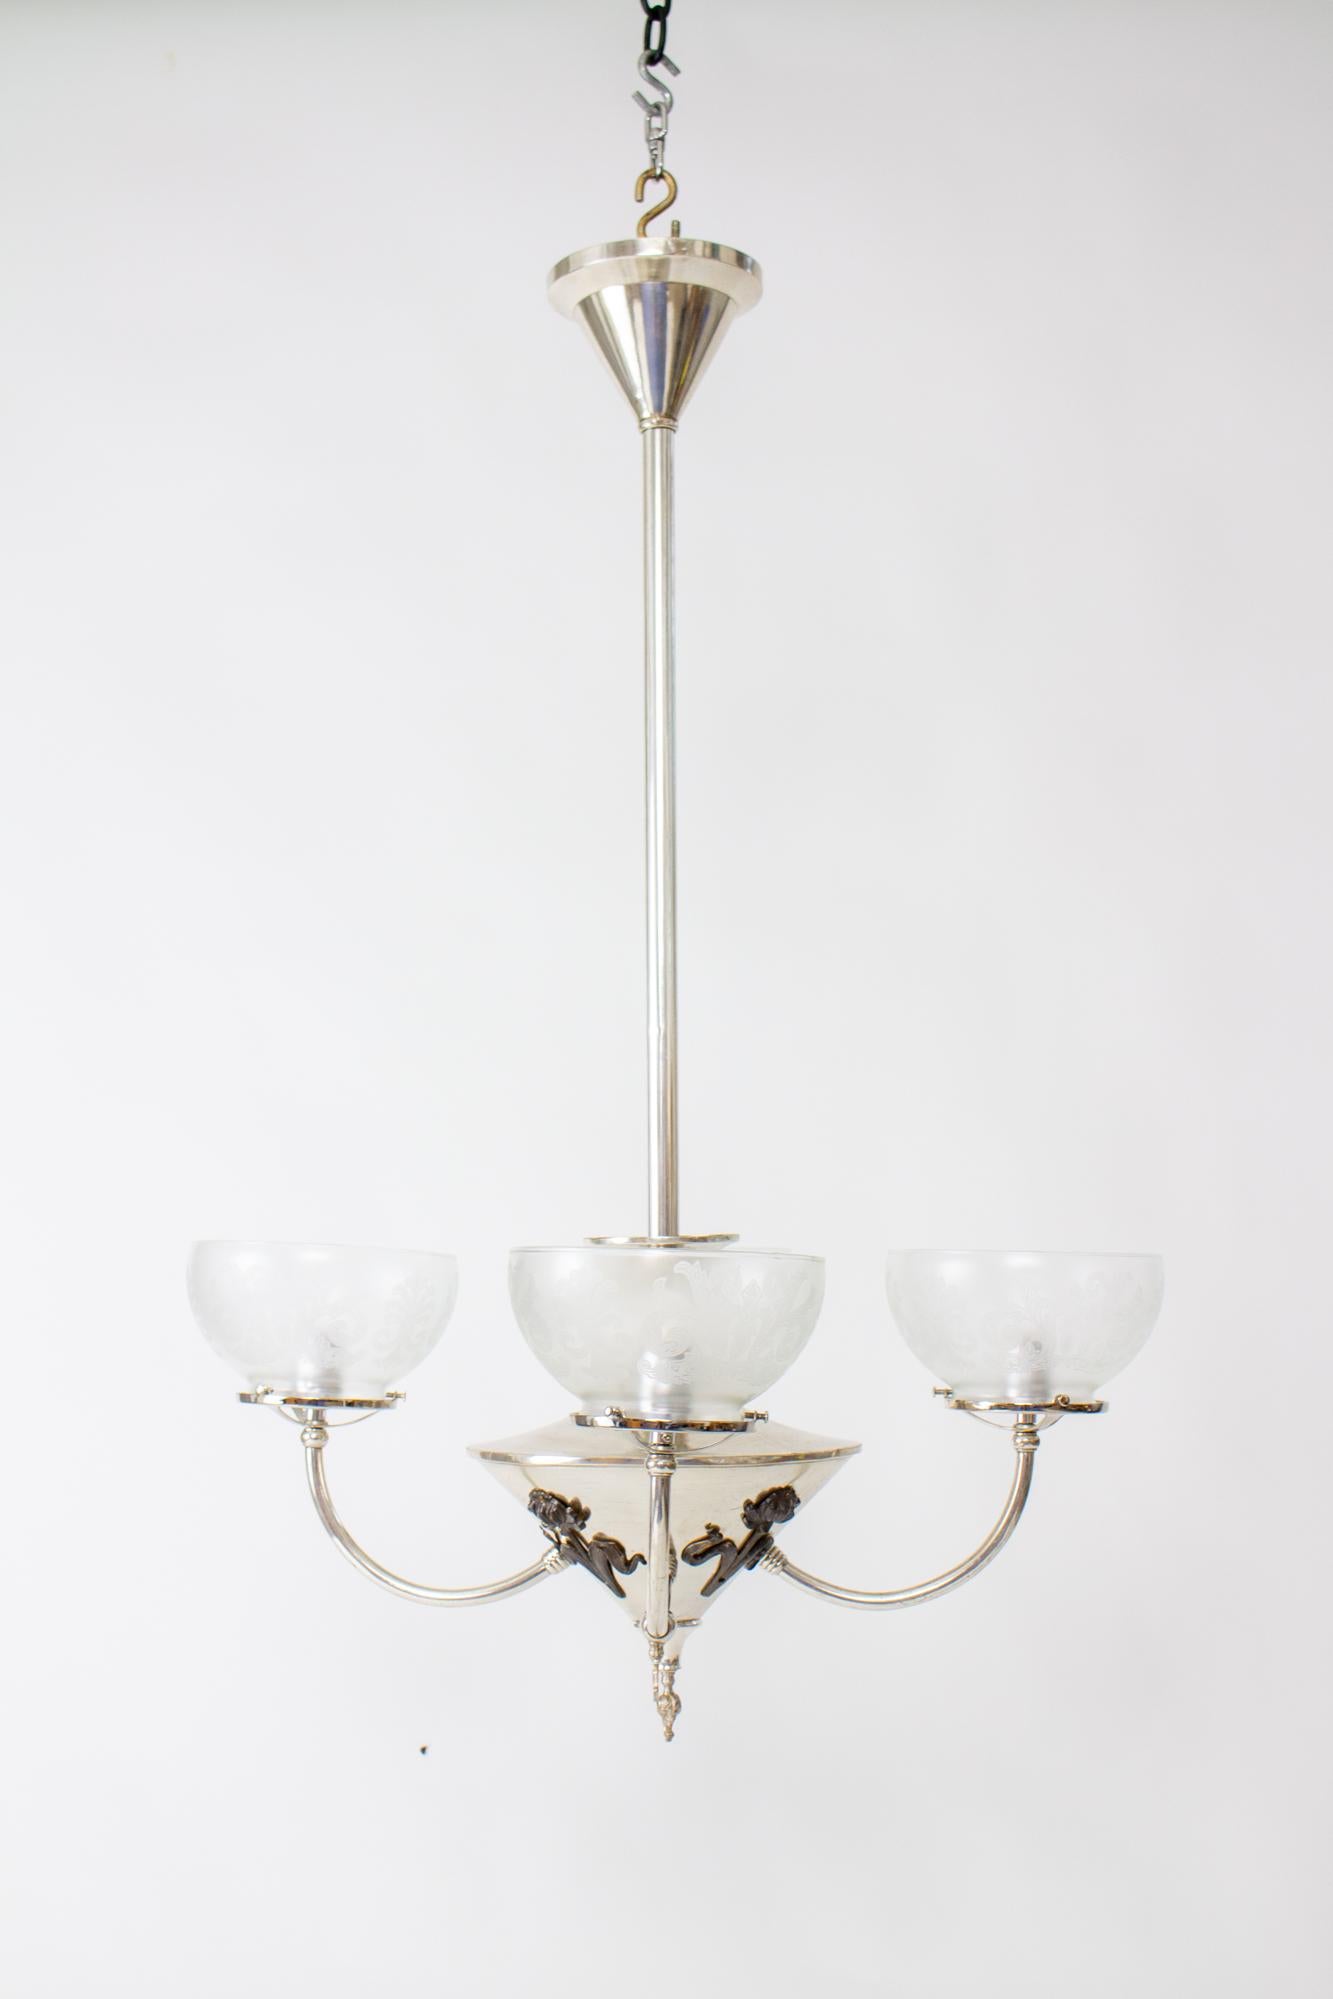 Four Light Silver Art Nouveau Gas and Electric Chandelier For Sale 1